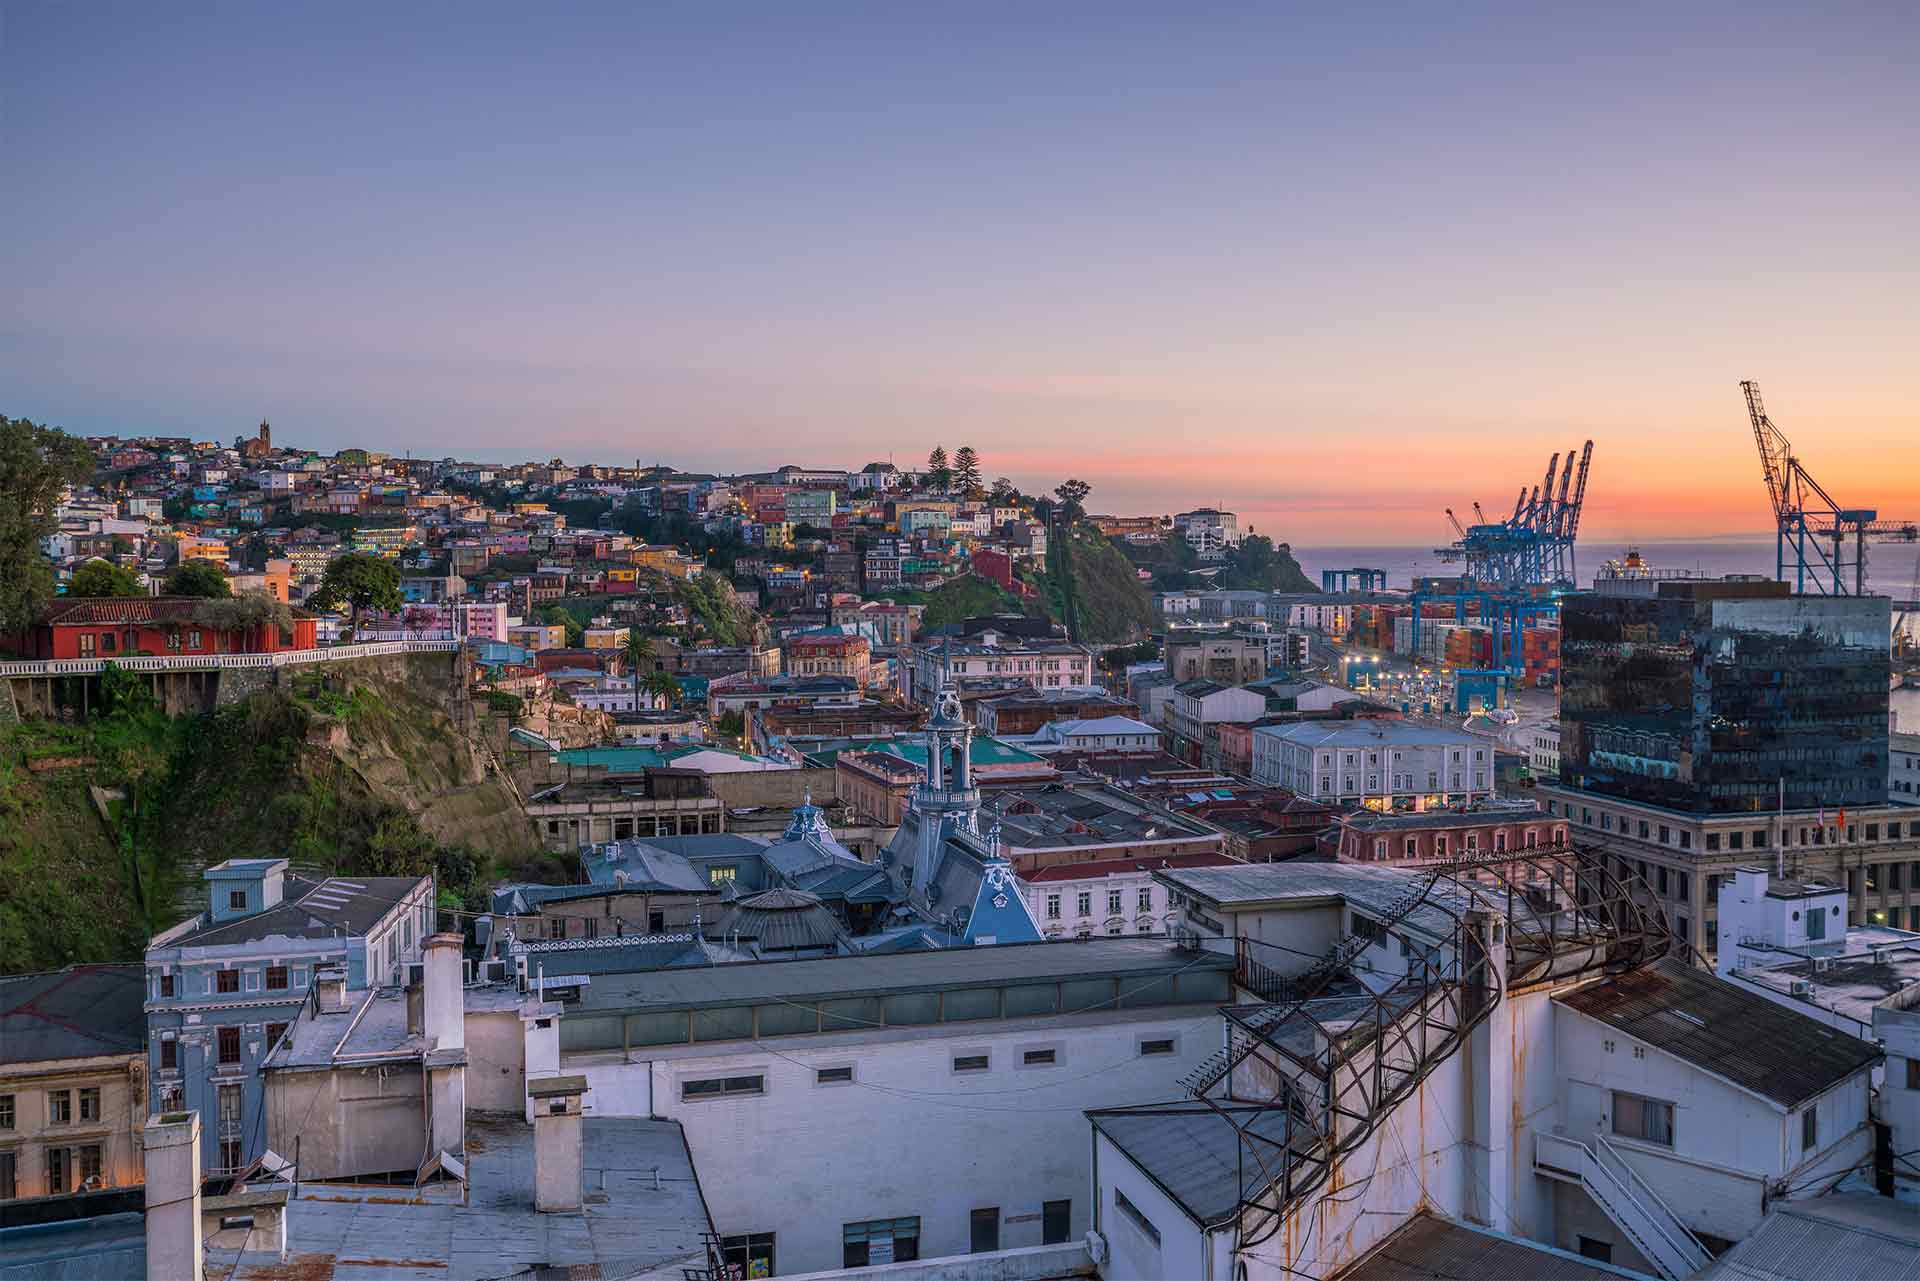 Valparaíso en Verano: Vivienda e Inversión en su Máxima Expresión